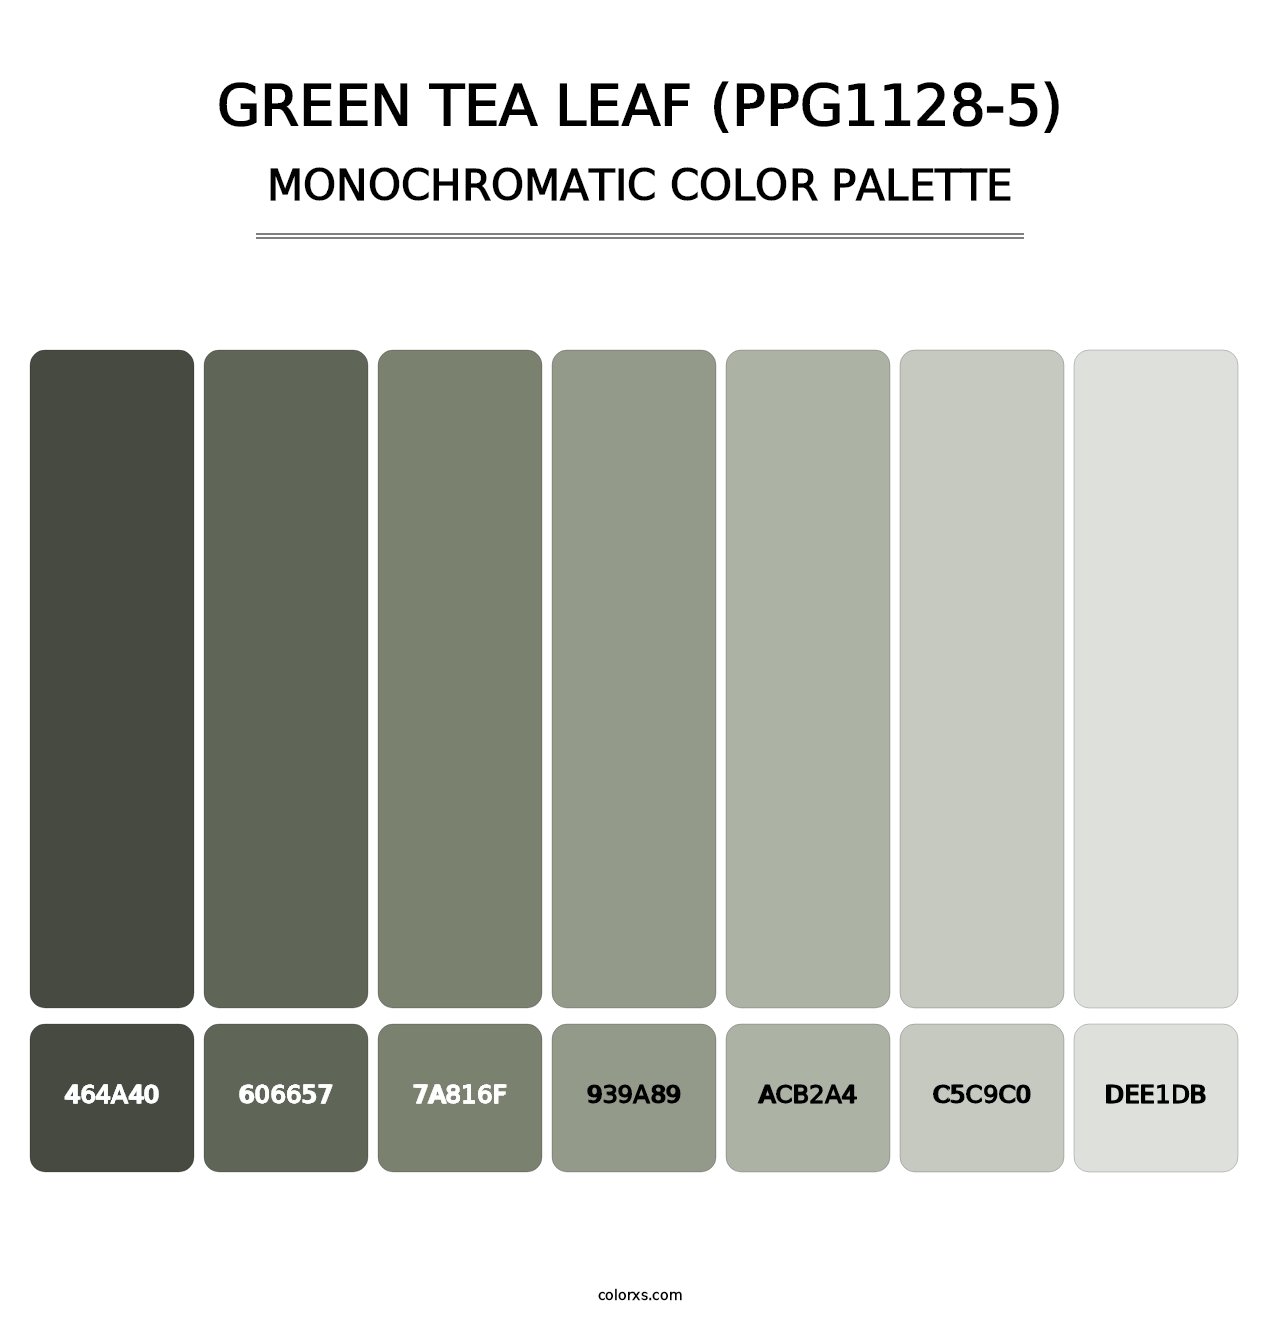 Green Tea Leaf (PPG1128-5) - Monochromatic Color Palette